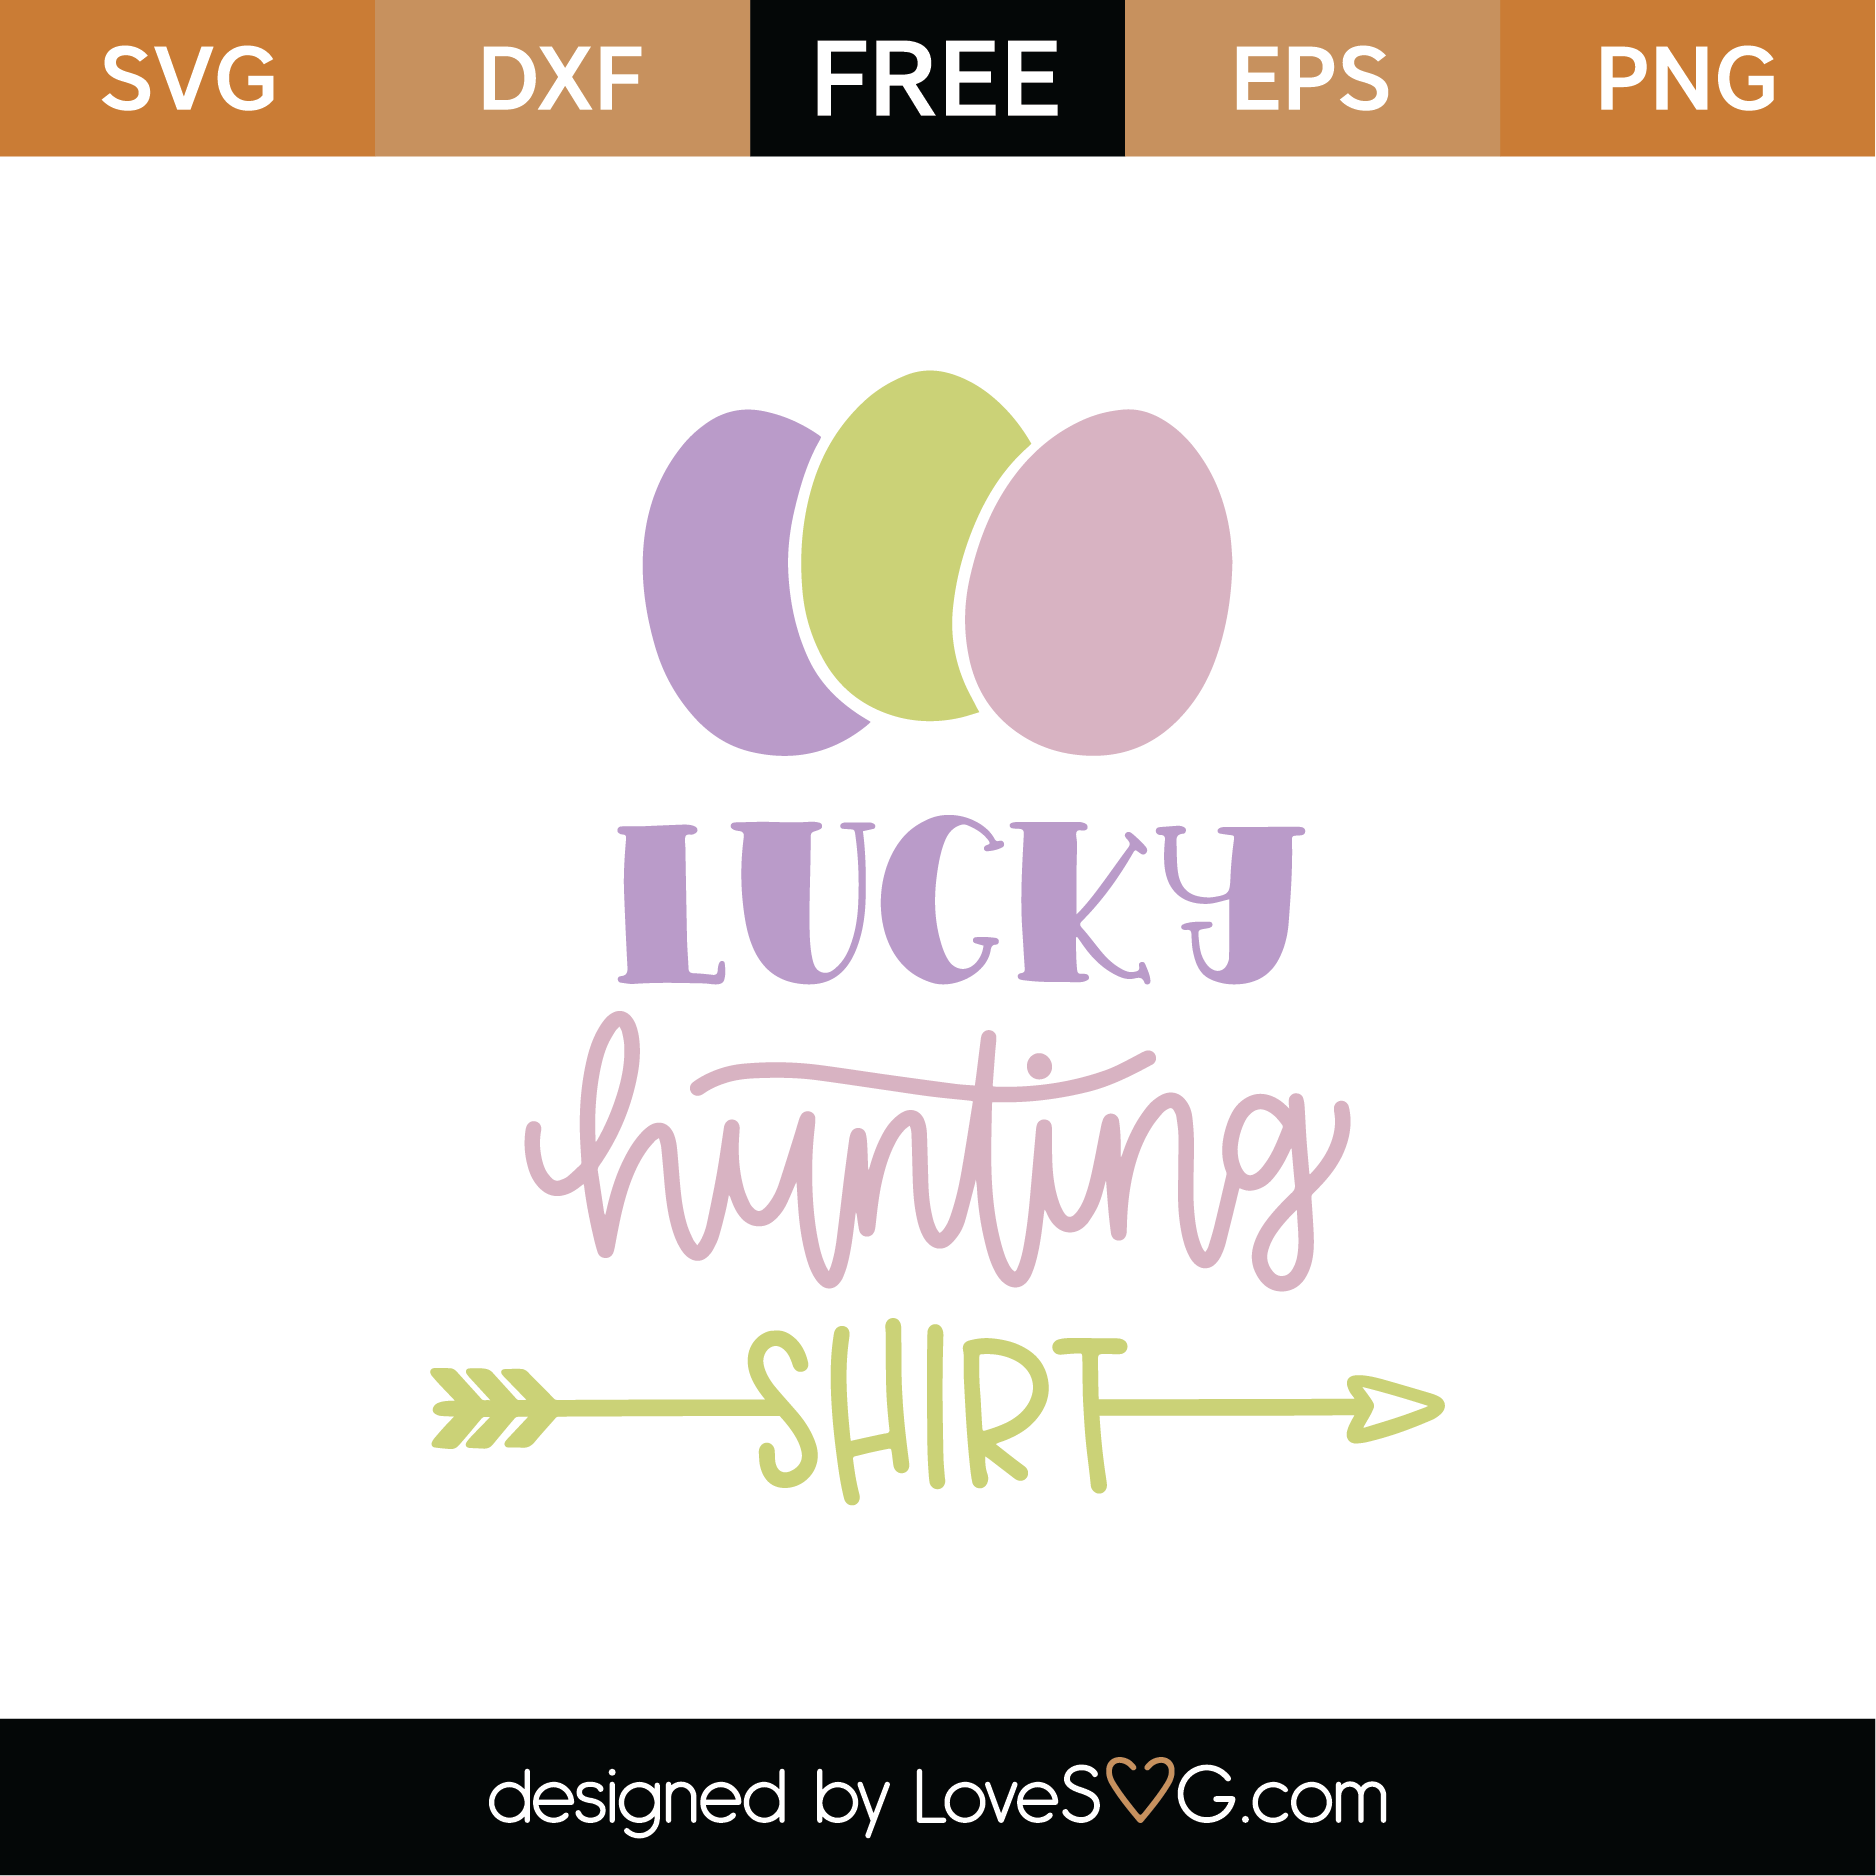 Download Free Lucky Hunting Shirt SVG Cut File | Lovesvg.com